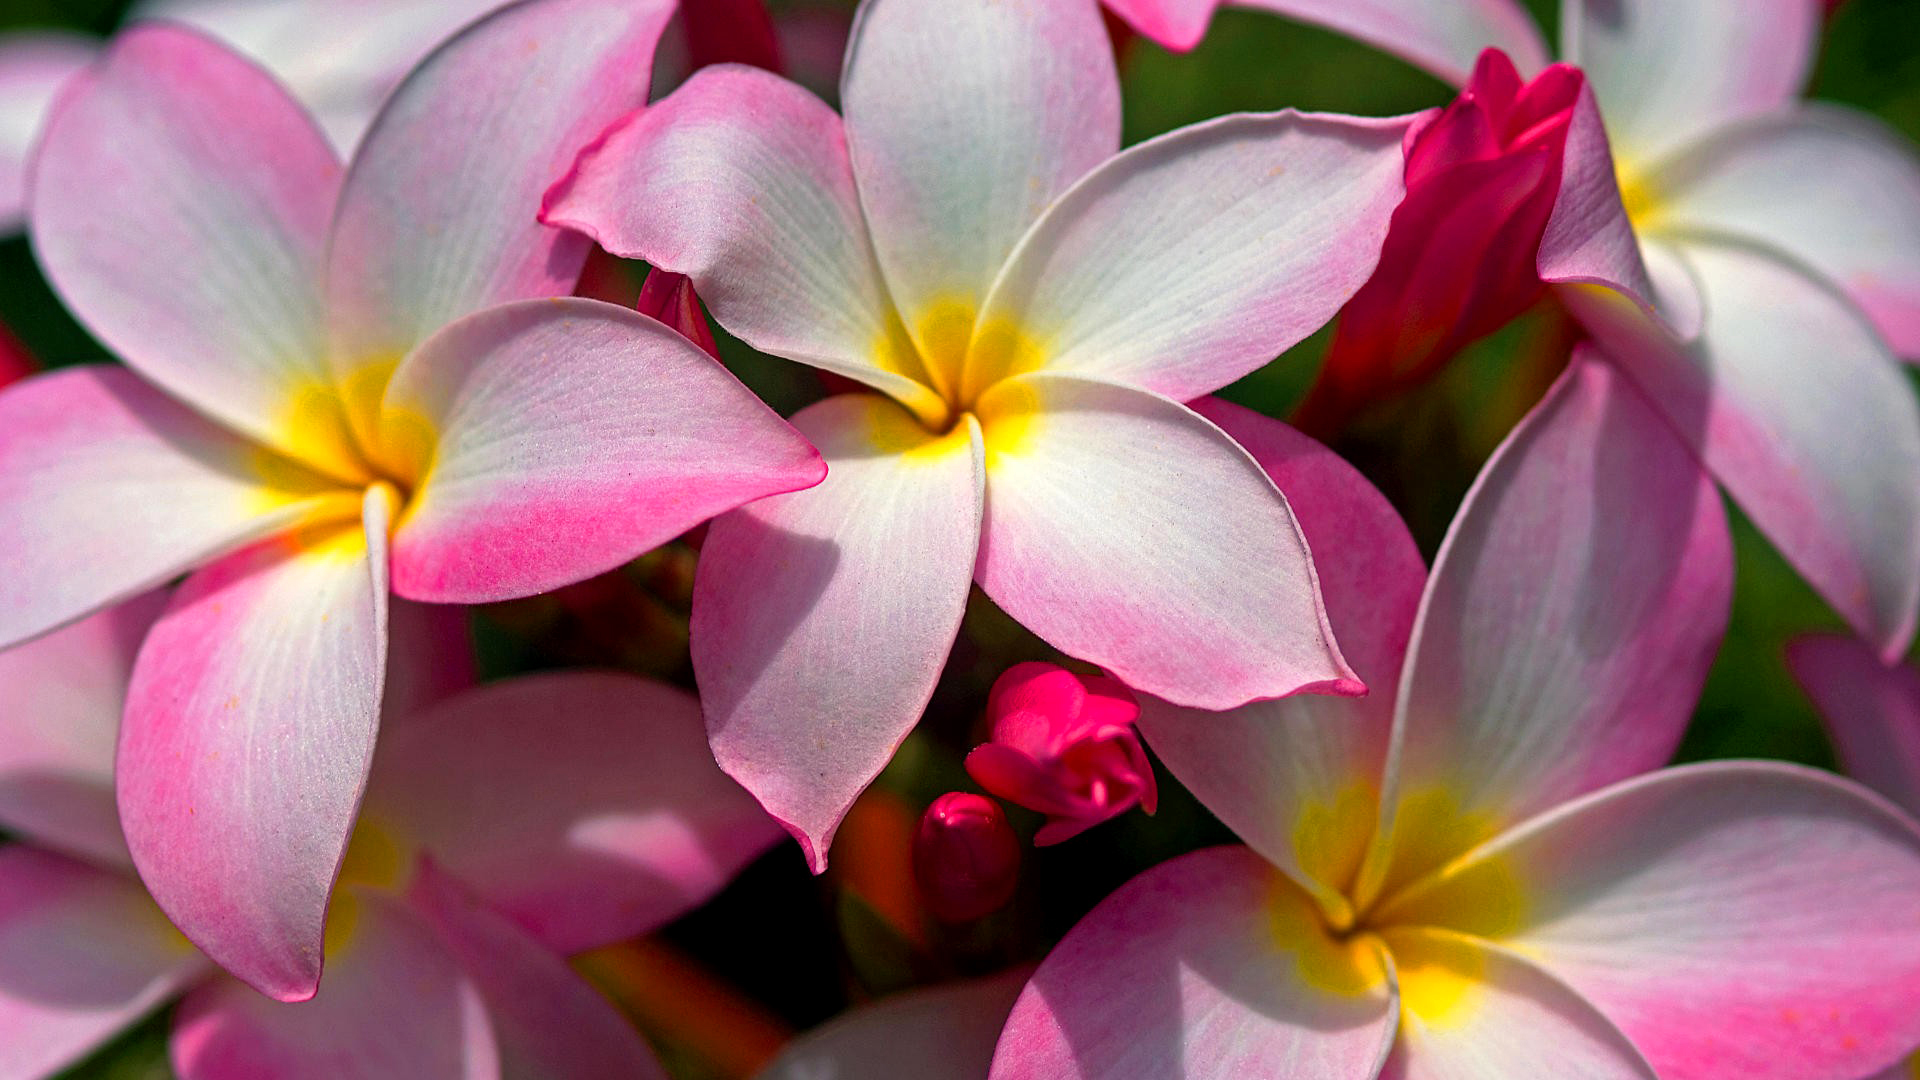 Descarga gratis la imagen Naturaleza, Flores, Flor, Flor Rosa, De Cerca, Frangipani, Tierra/naturaleza, Plumería en el escritorio de tu PC